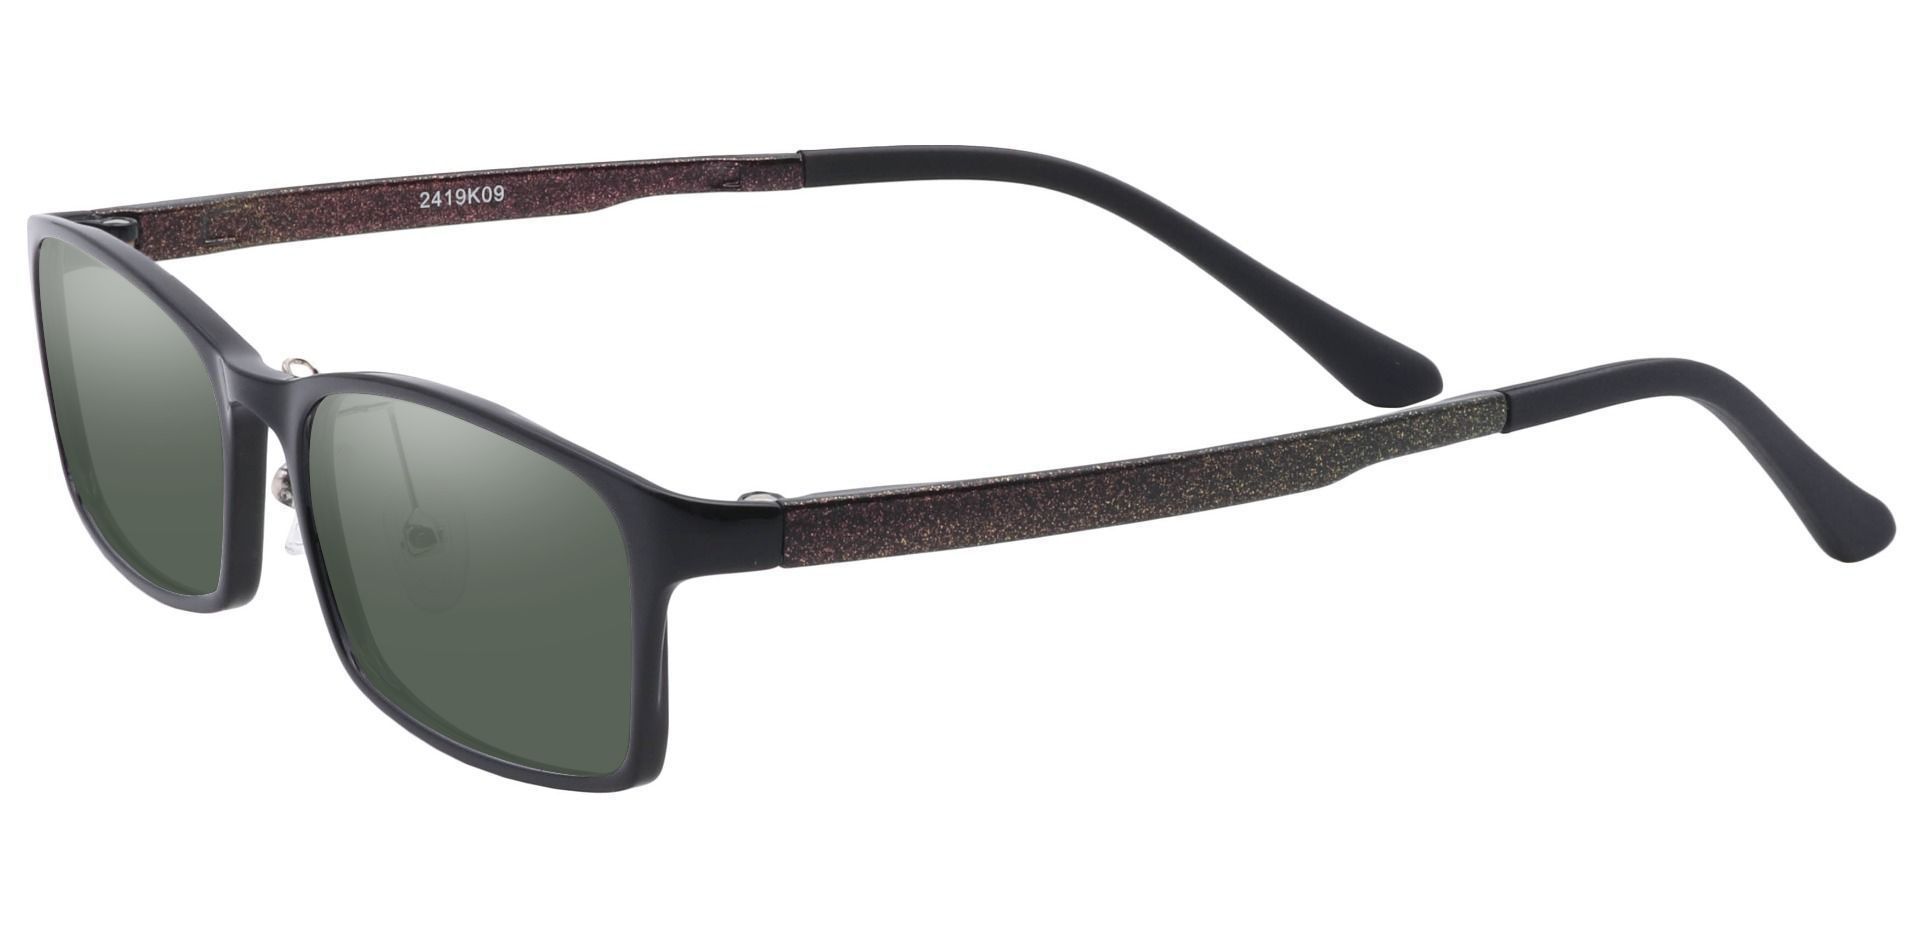 Hydra Rectangle Prescription Sunglasses - Black Frame With Green Lenses